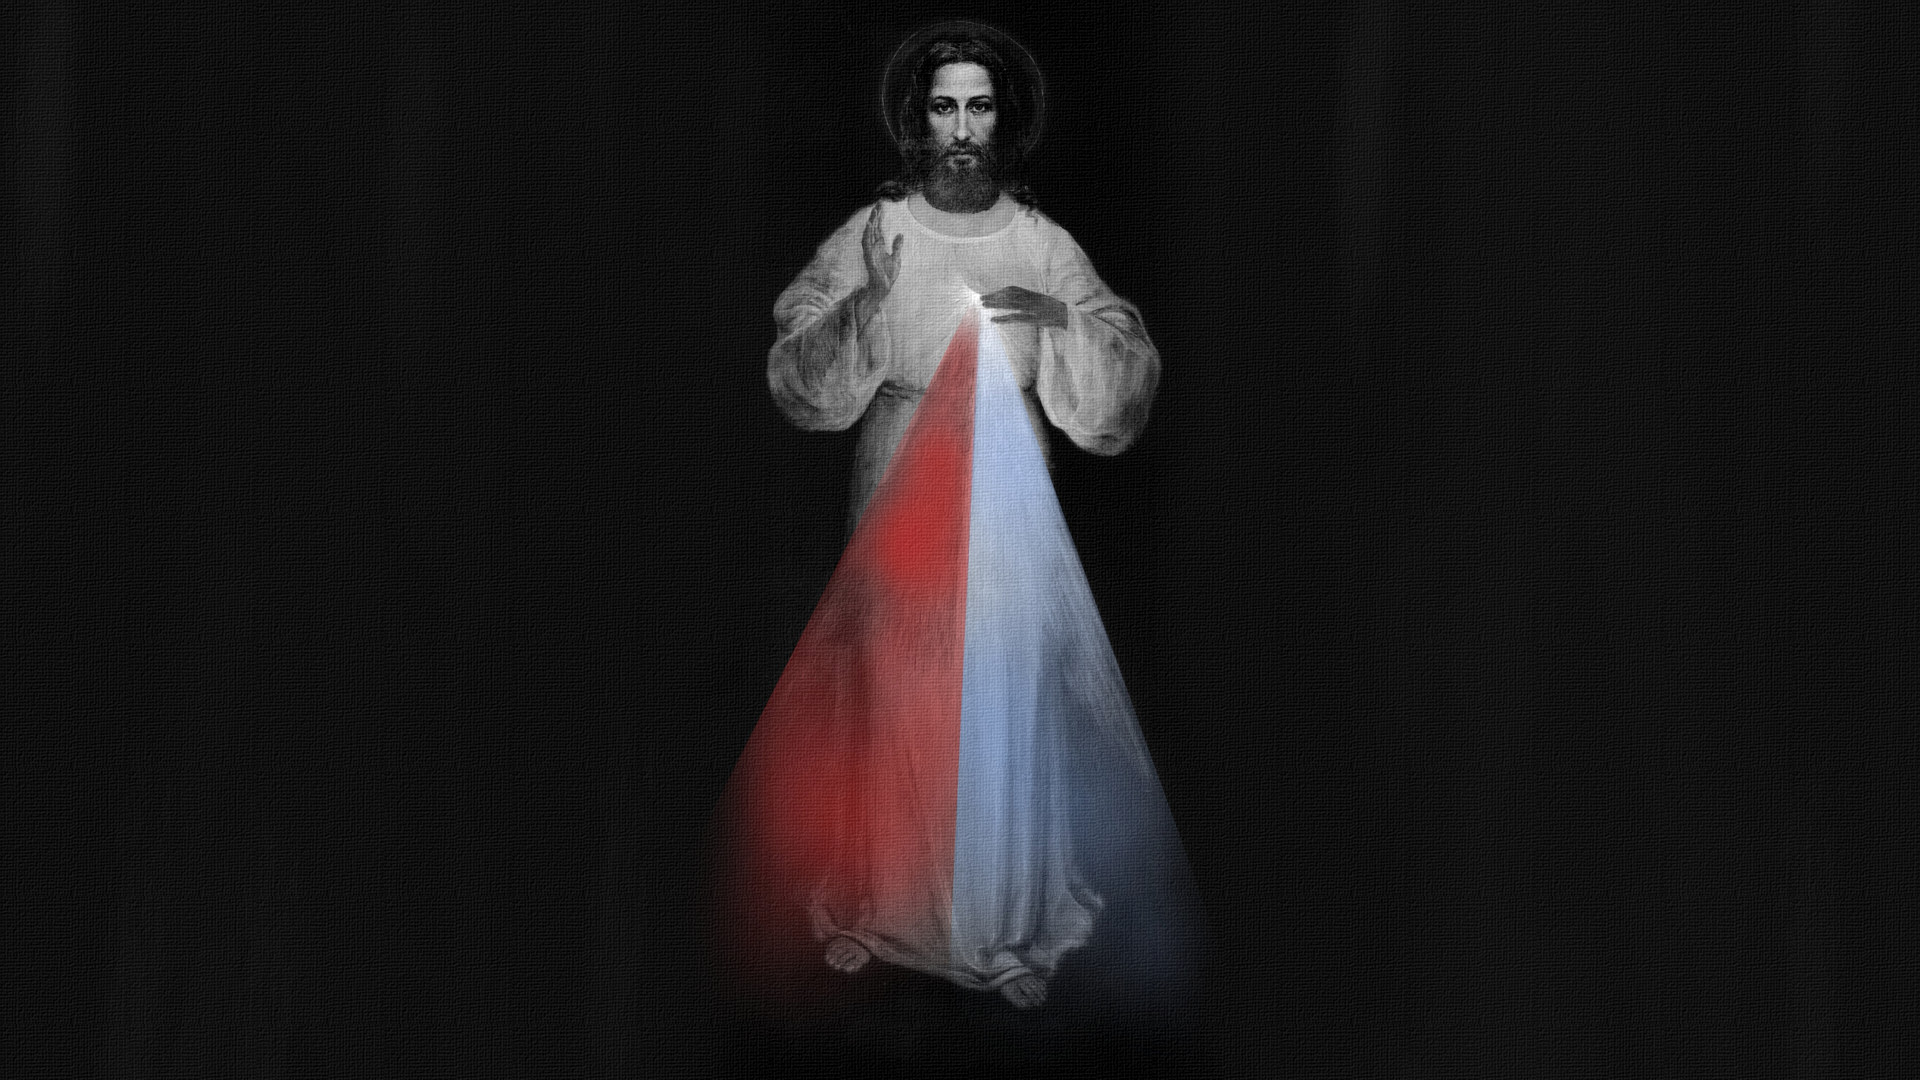 General 1920x1080 Divine Mercy Jesus Christ monochrome painting religious Christianity catholic lights